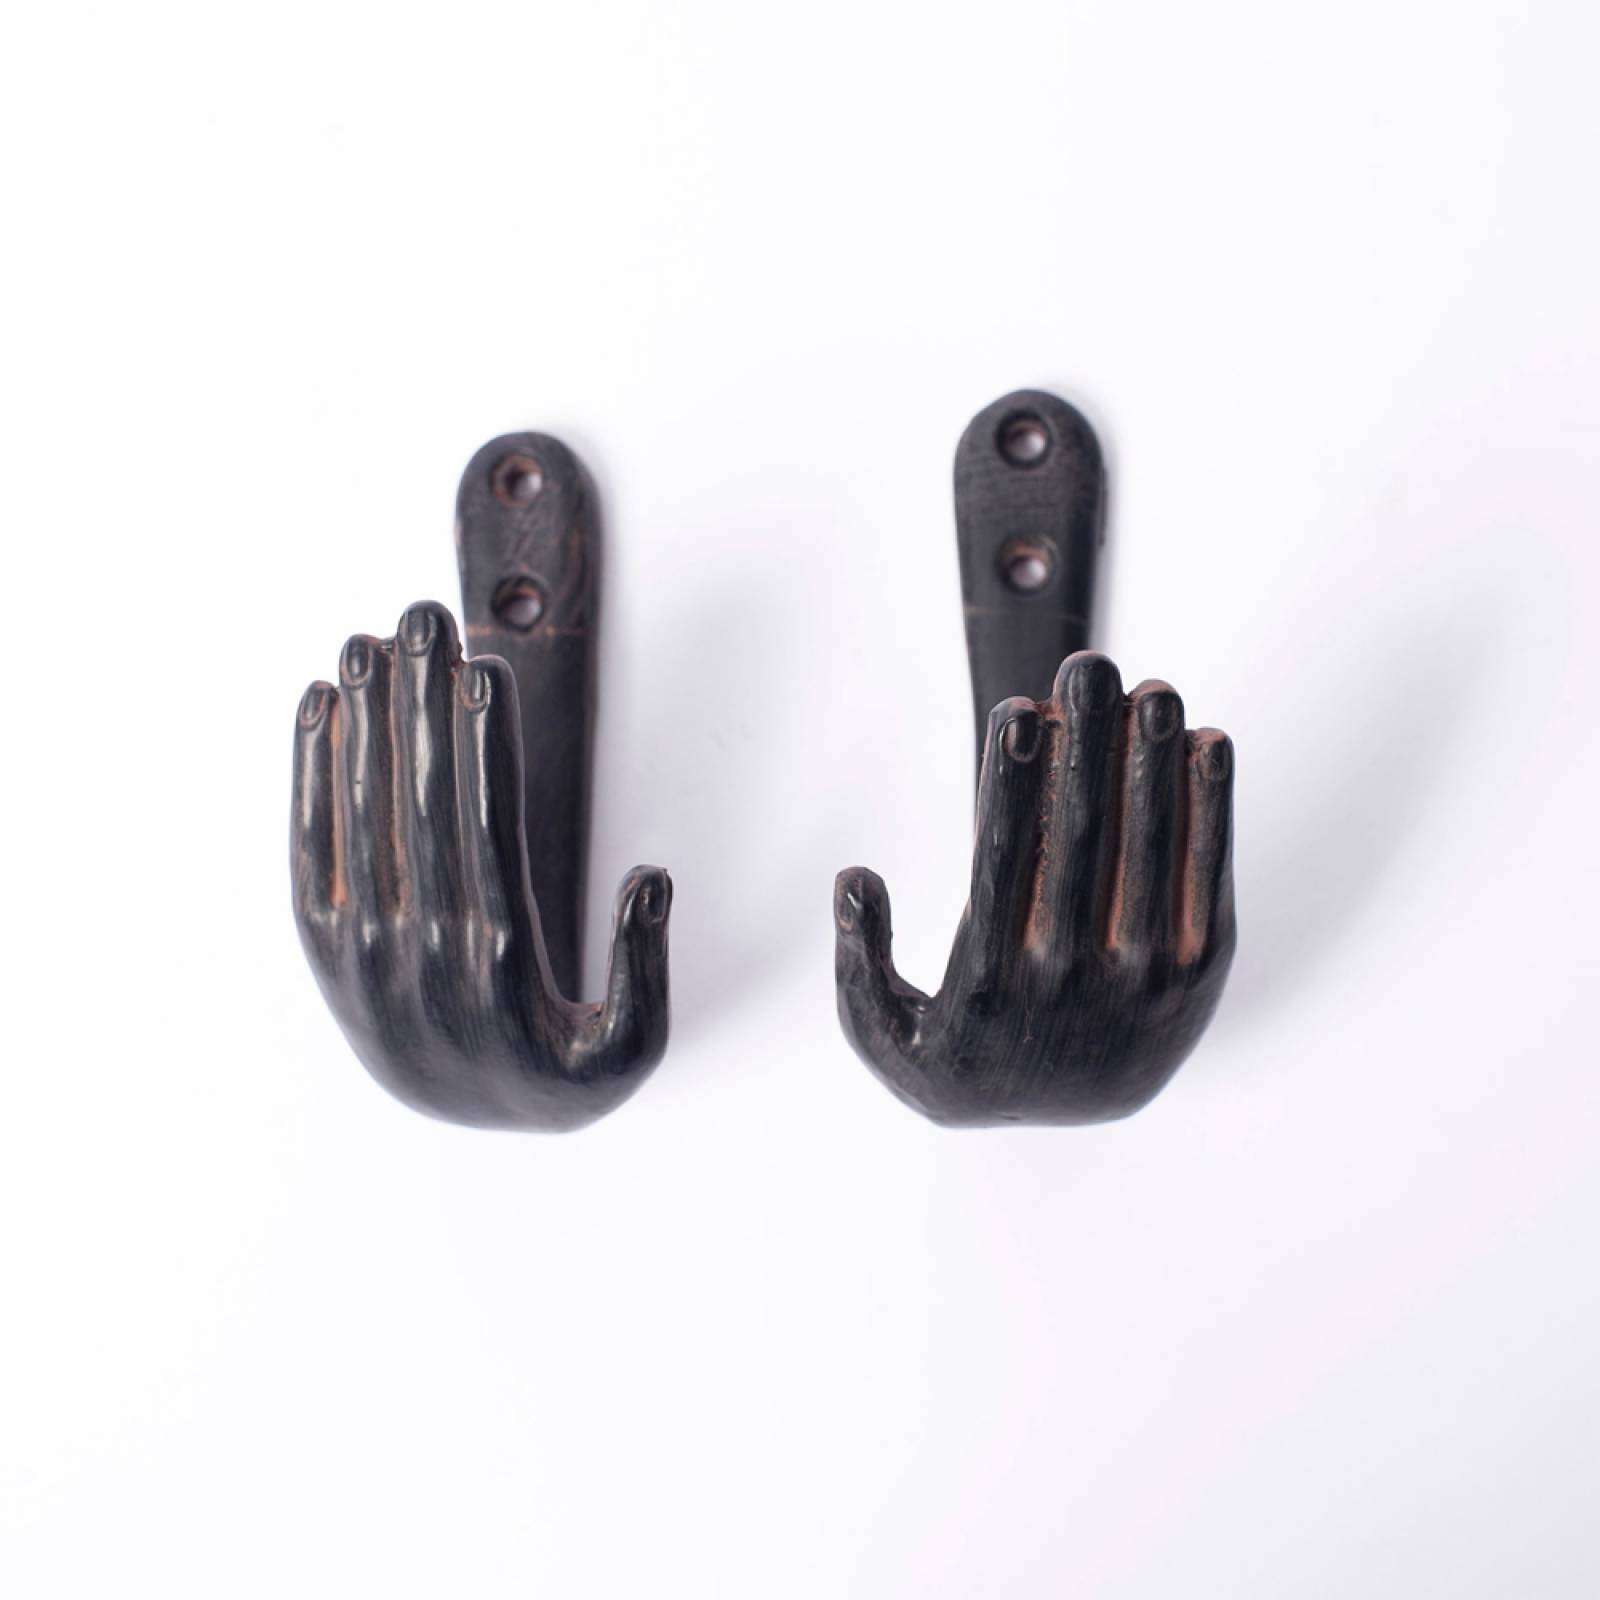 Black Iron Single Hand Hook thumbnails